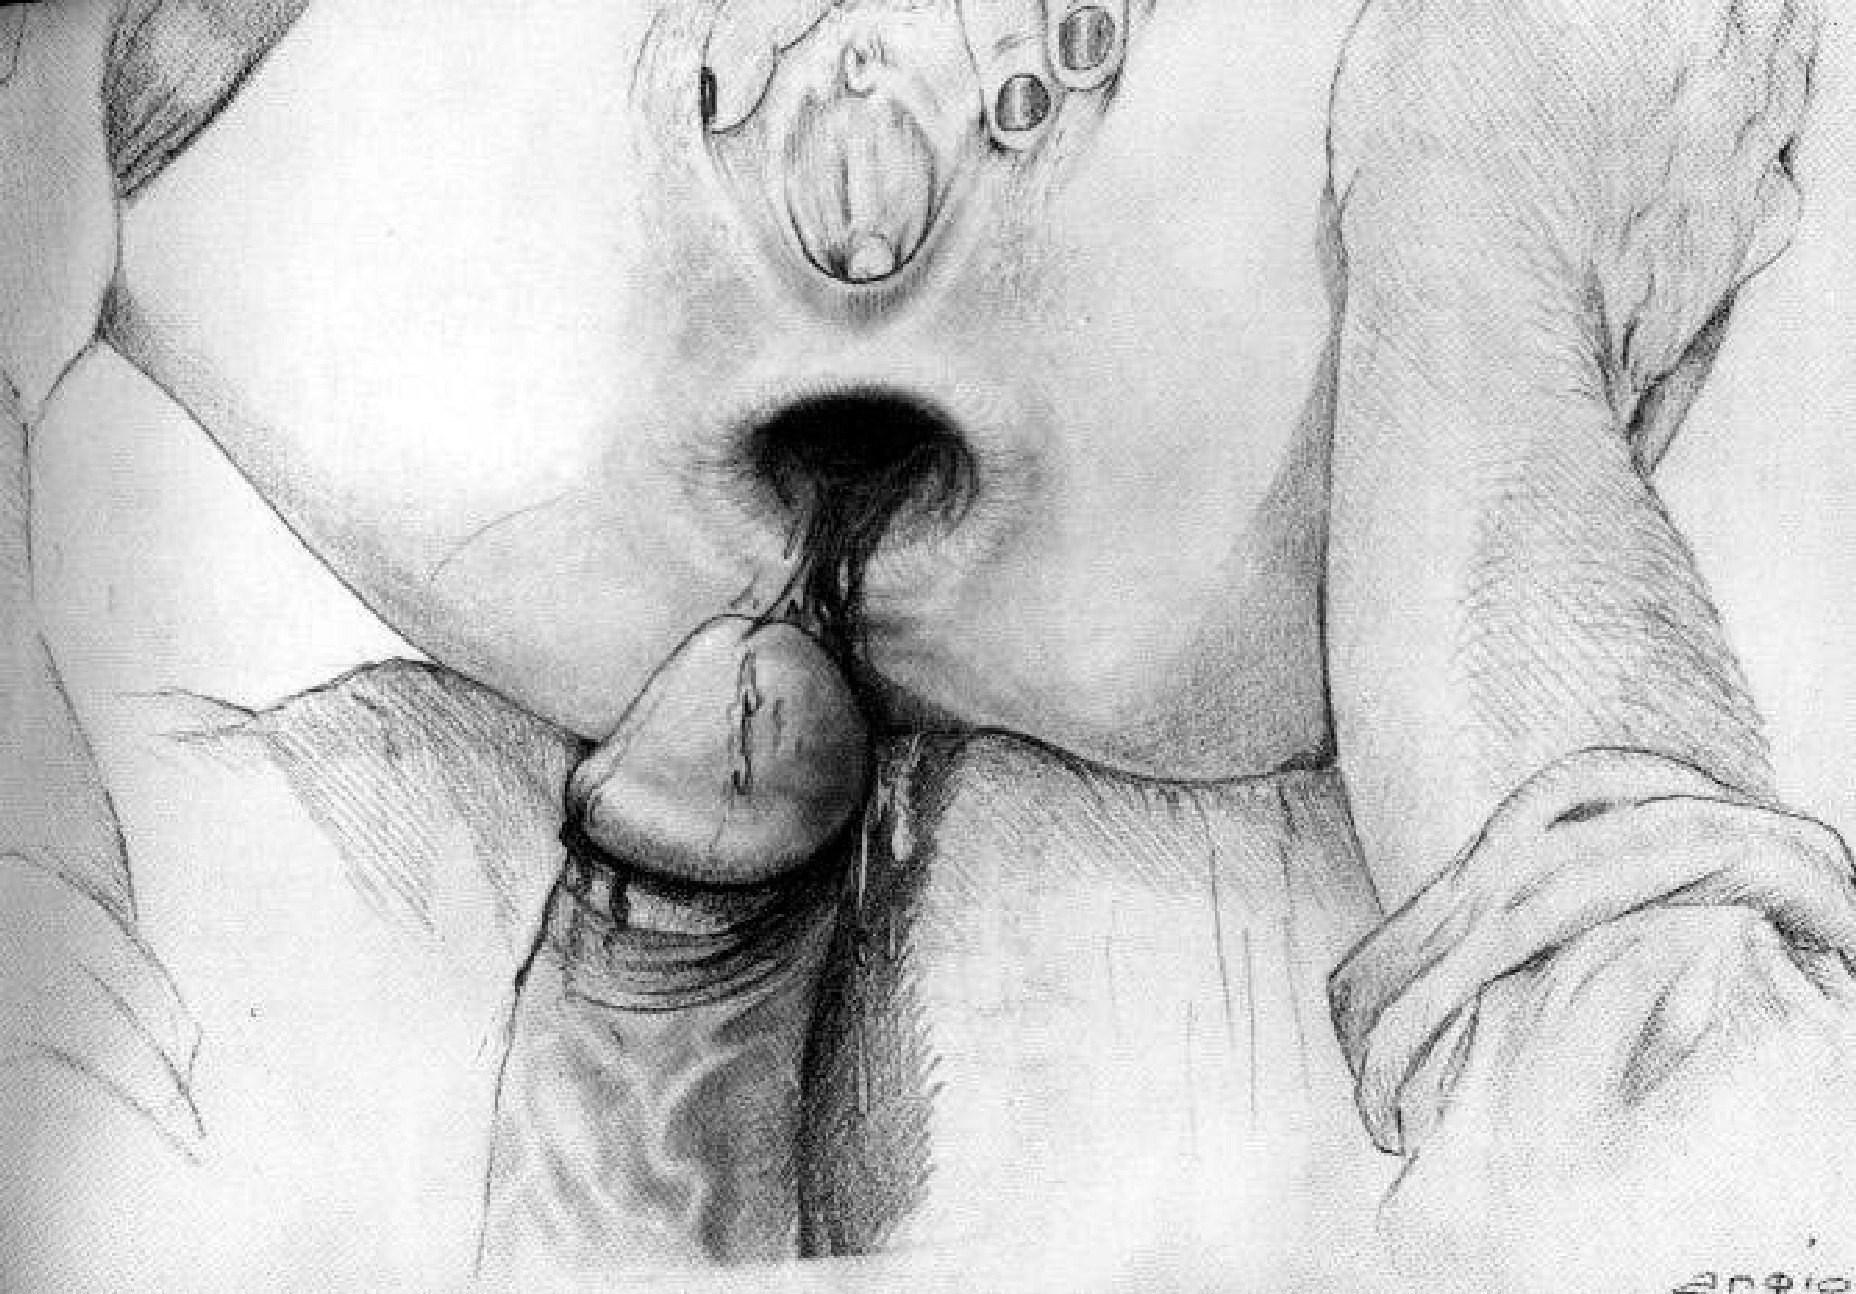 Erotic Blowjob Painting - Blowjob Erotic Art (26 photos) - sex eporner pics